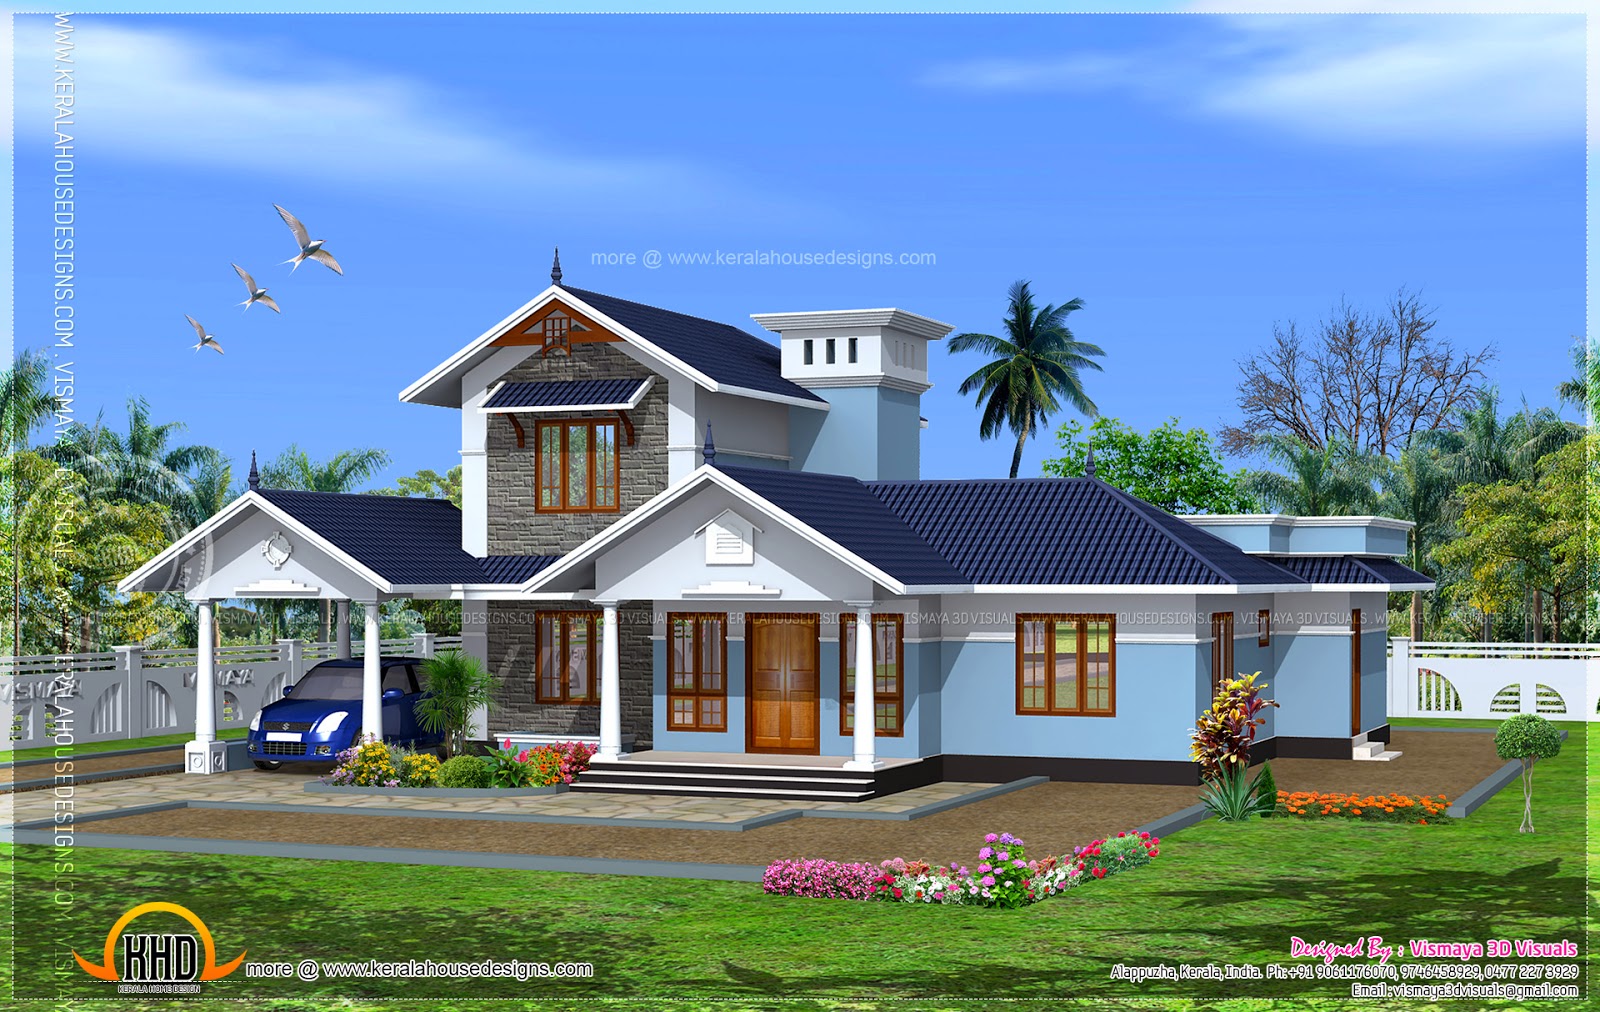  Kerala  model villa with open courtyard  Kerala  home  